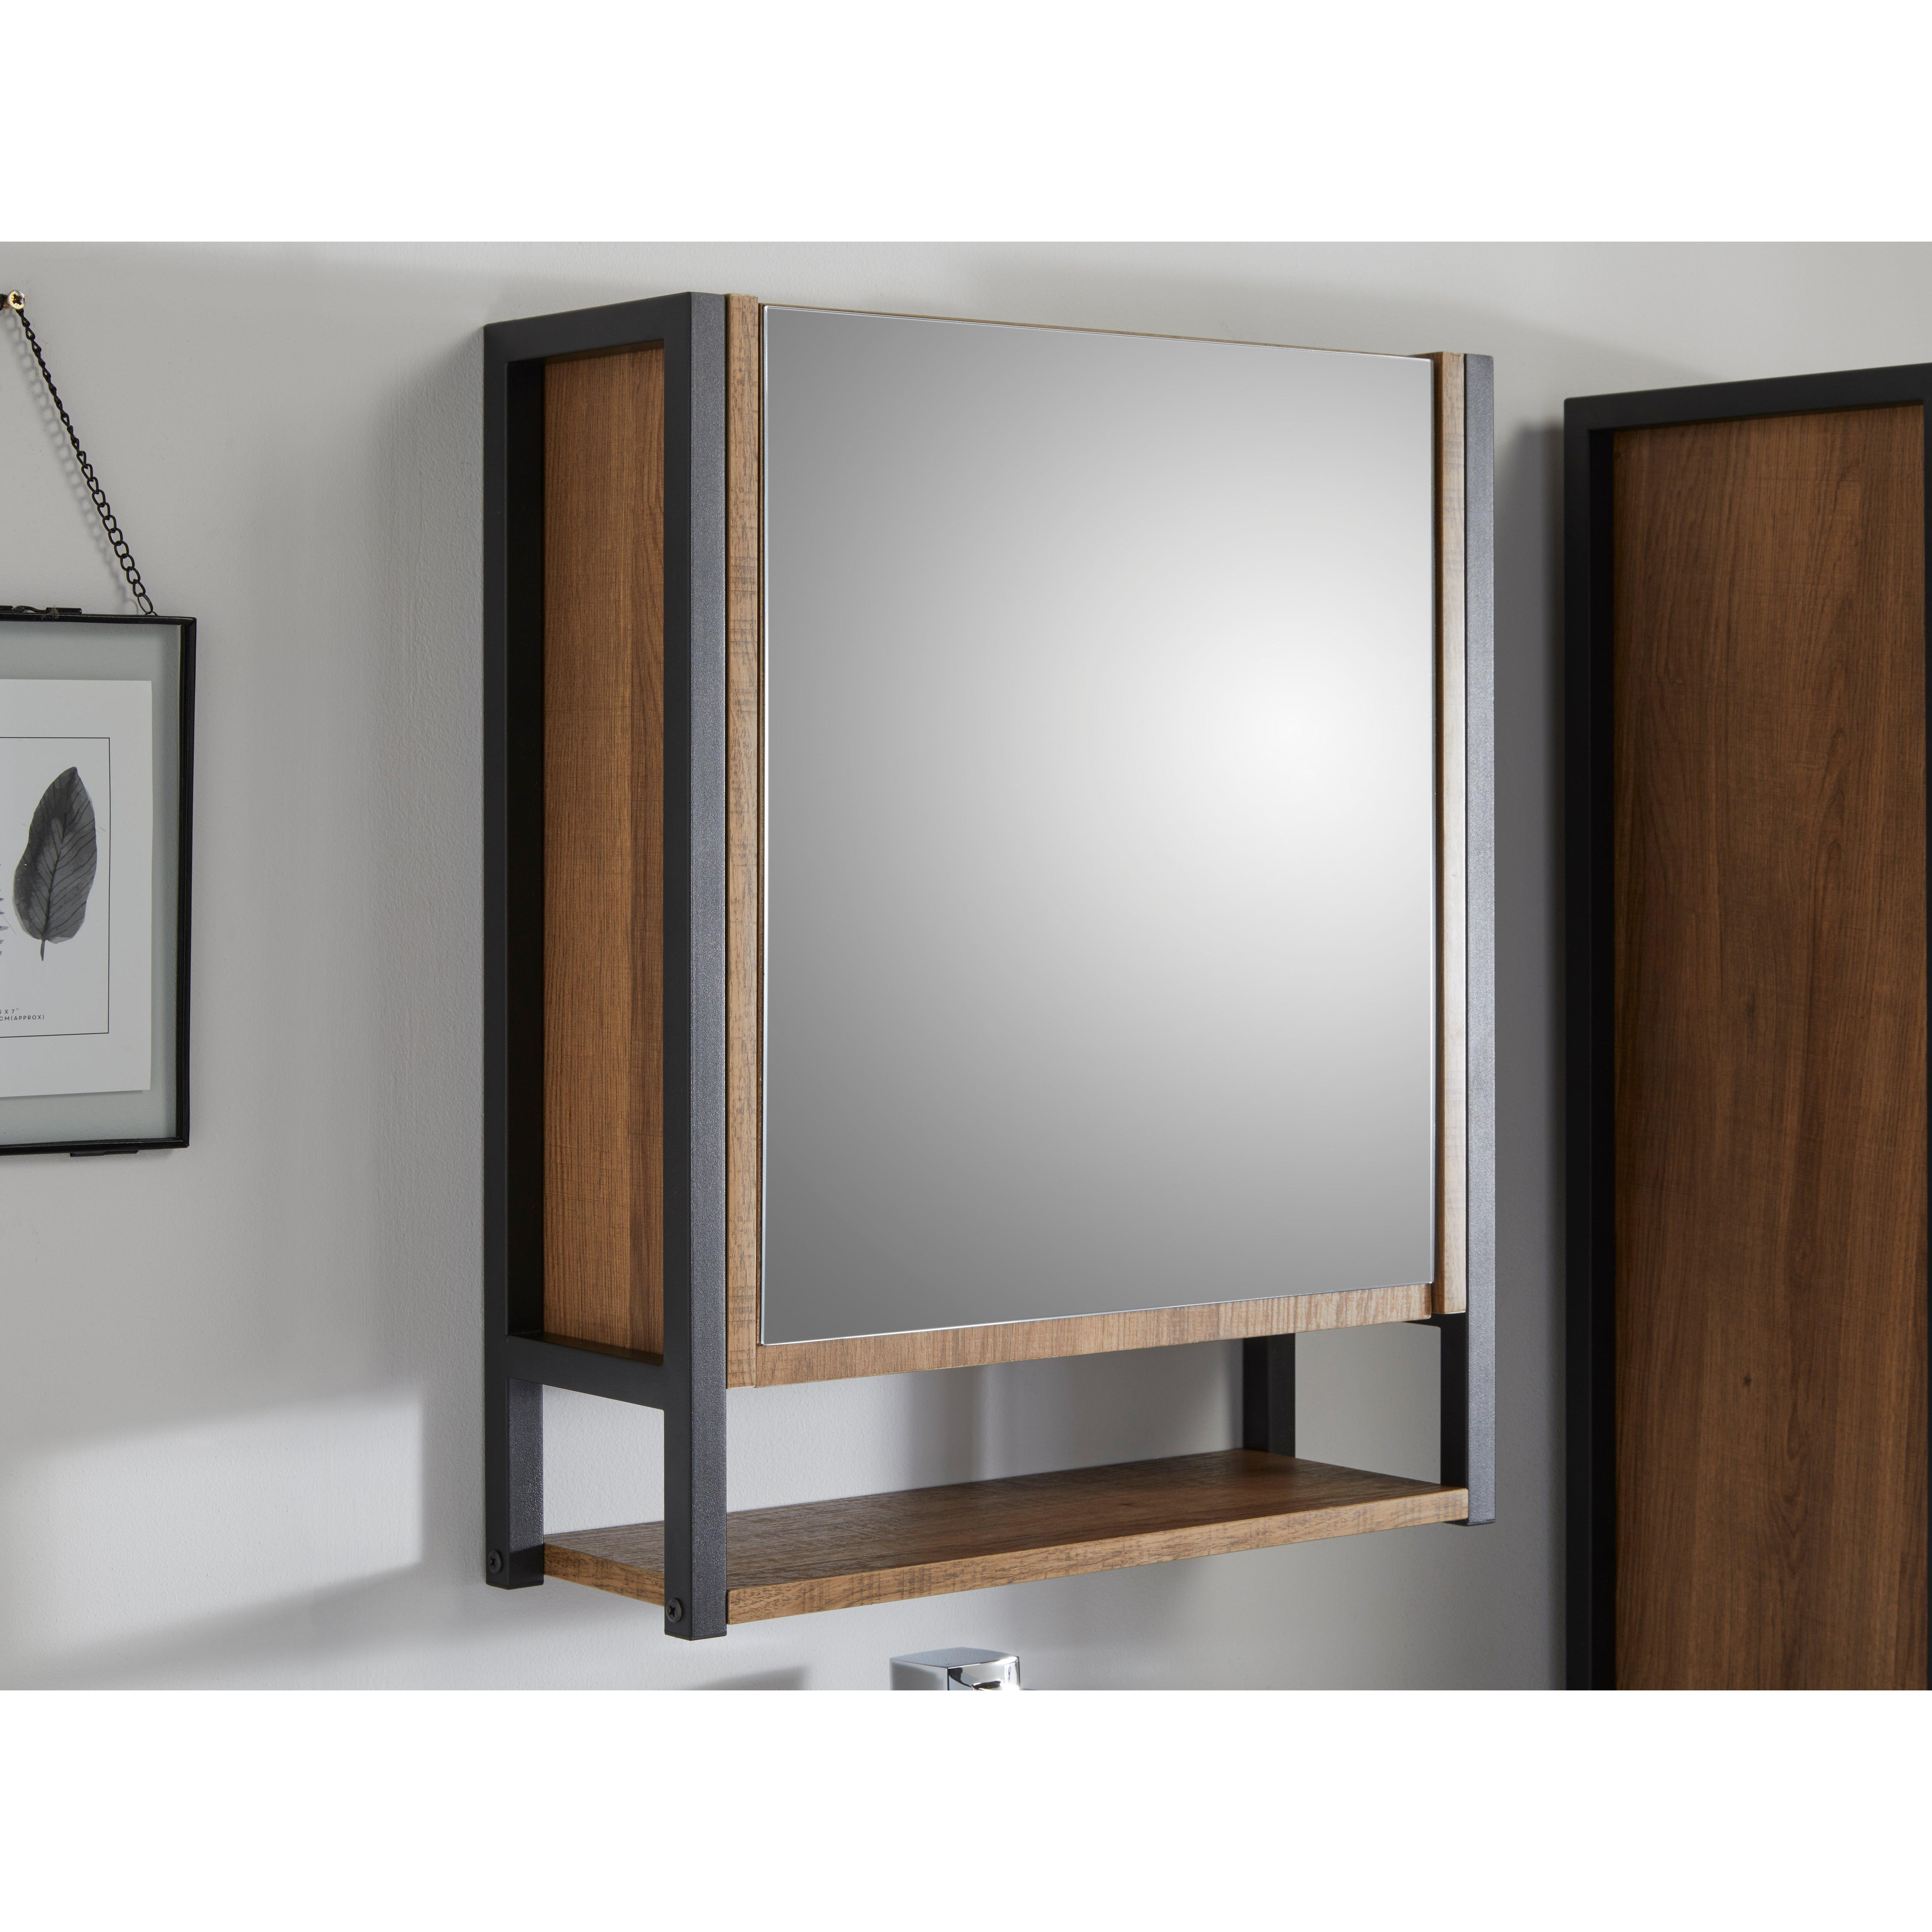 Wall Mounted Wood Effect Mirrored Bathroom Cabinet - image 1